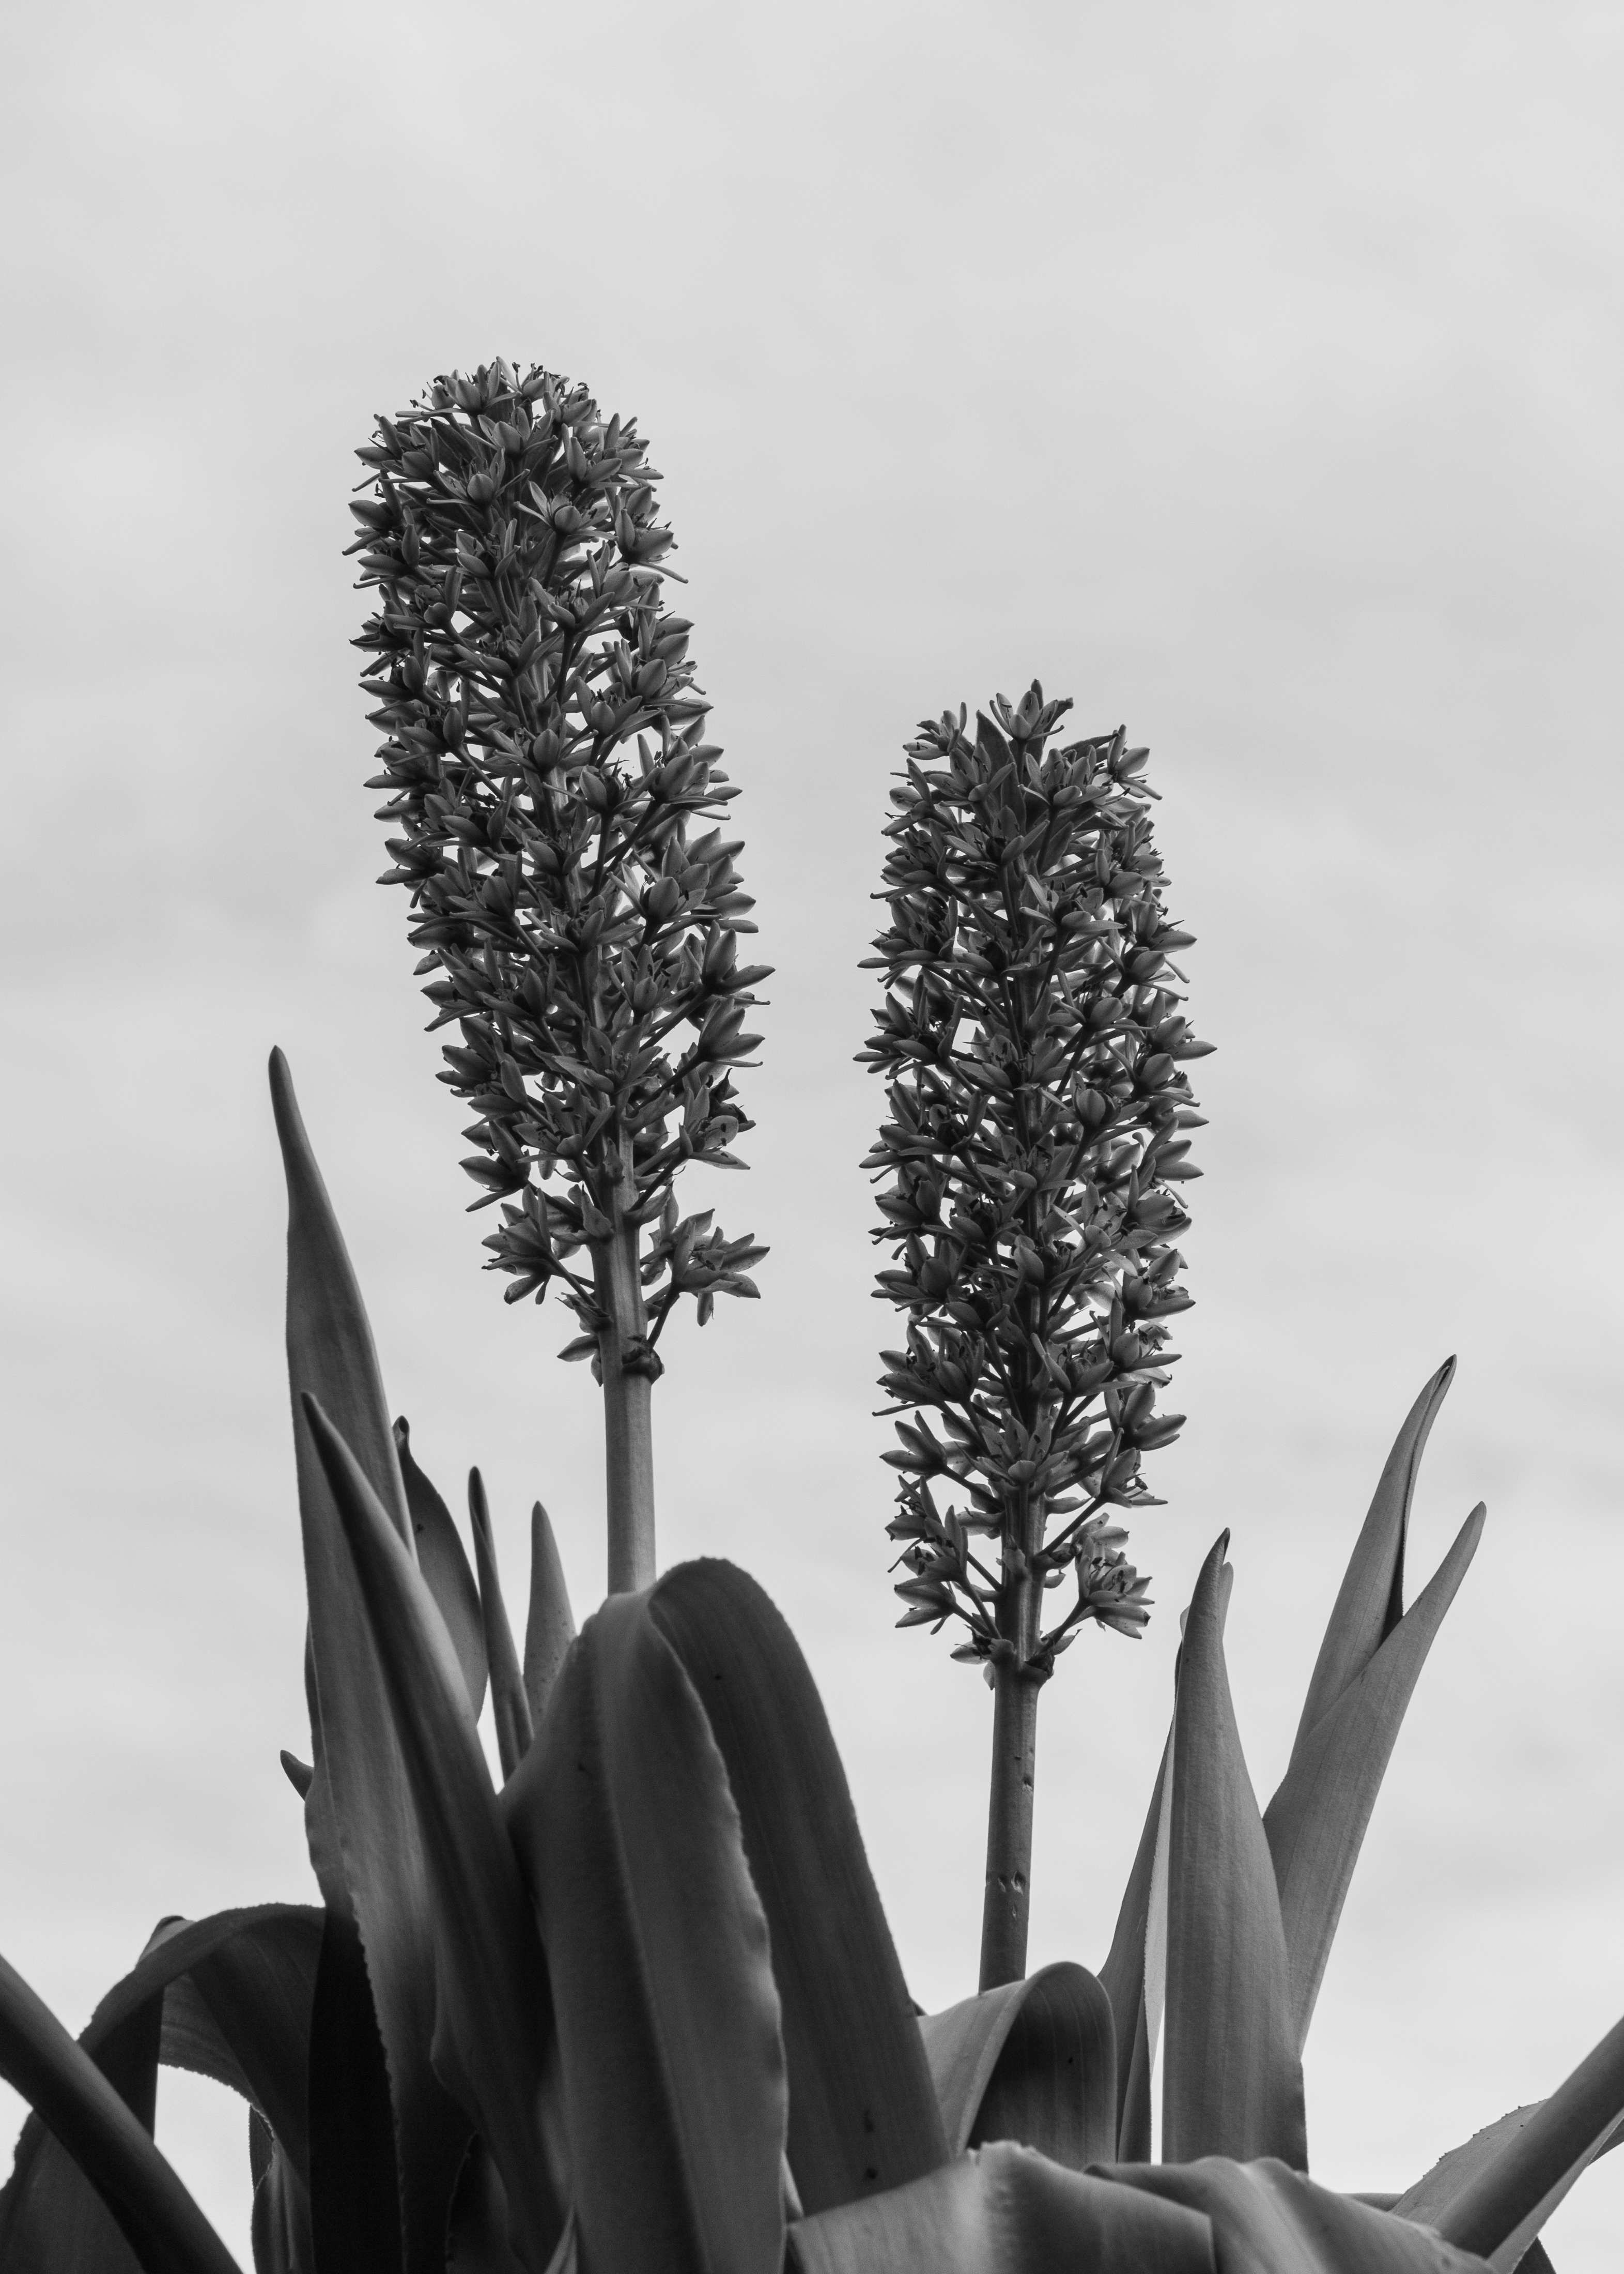 Eucomis pole-evansii. Familie Asparagaceae. (actm.) Locatie, Tuinreservaat Jonkervallei 02